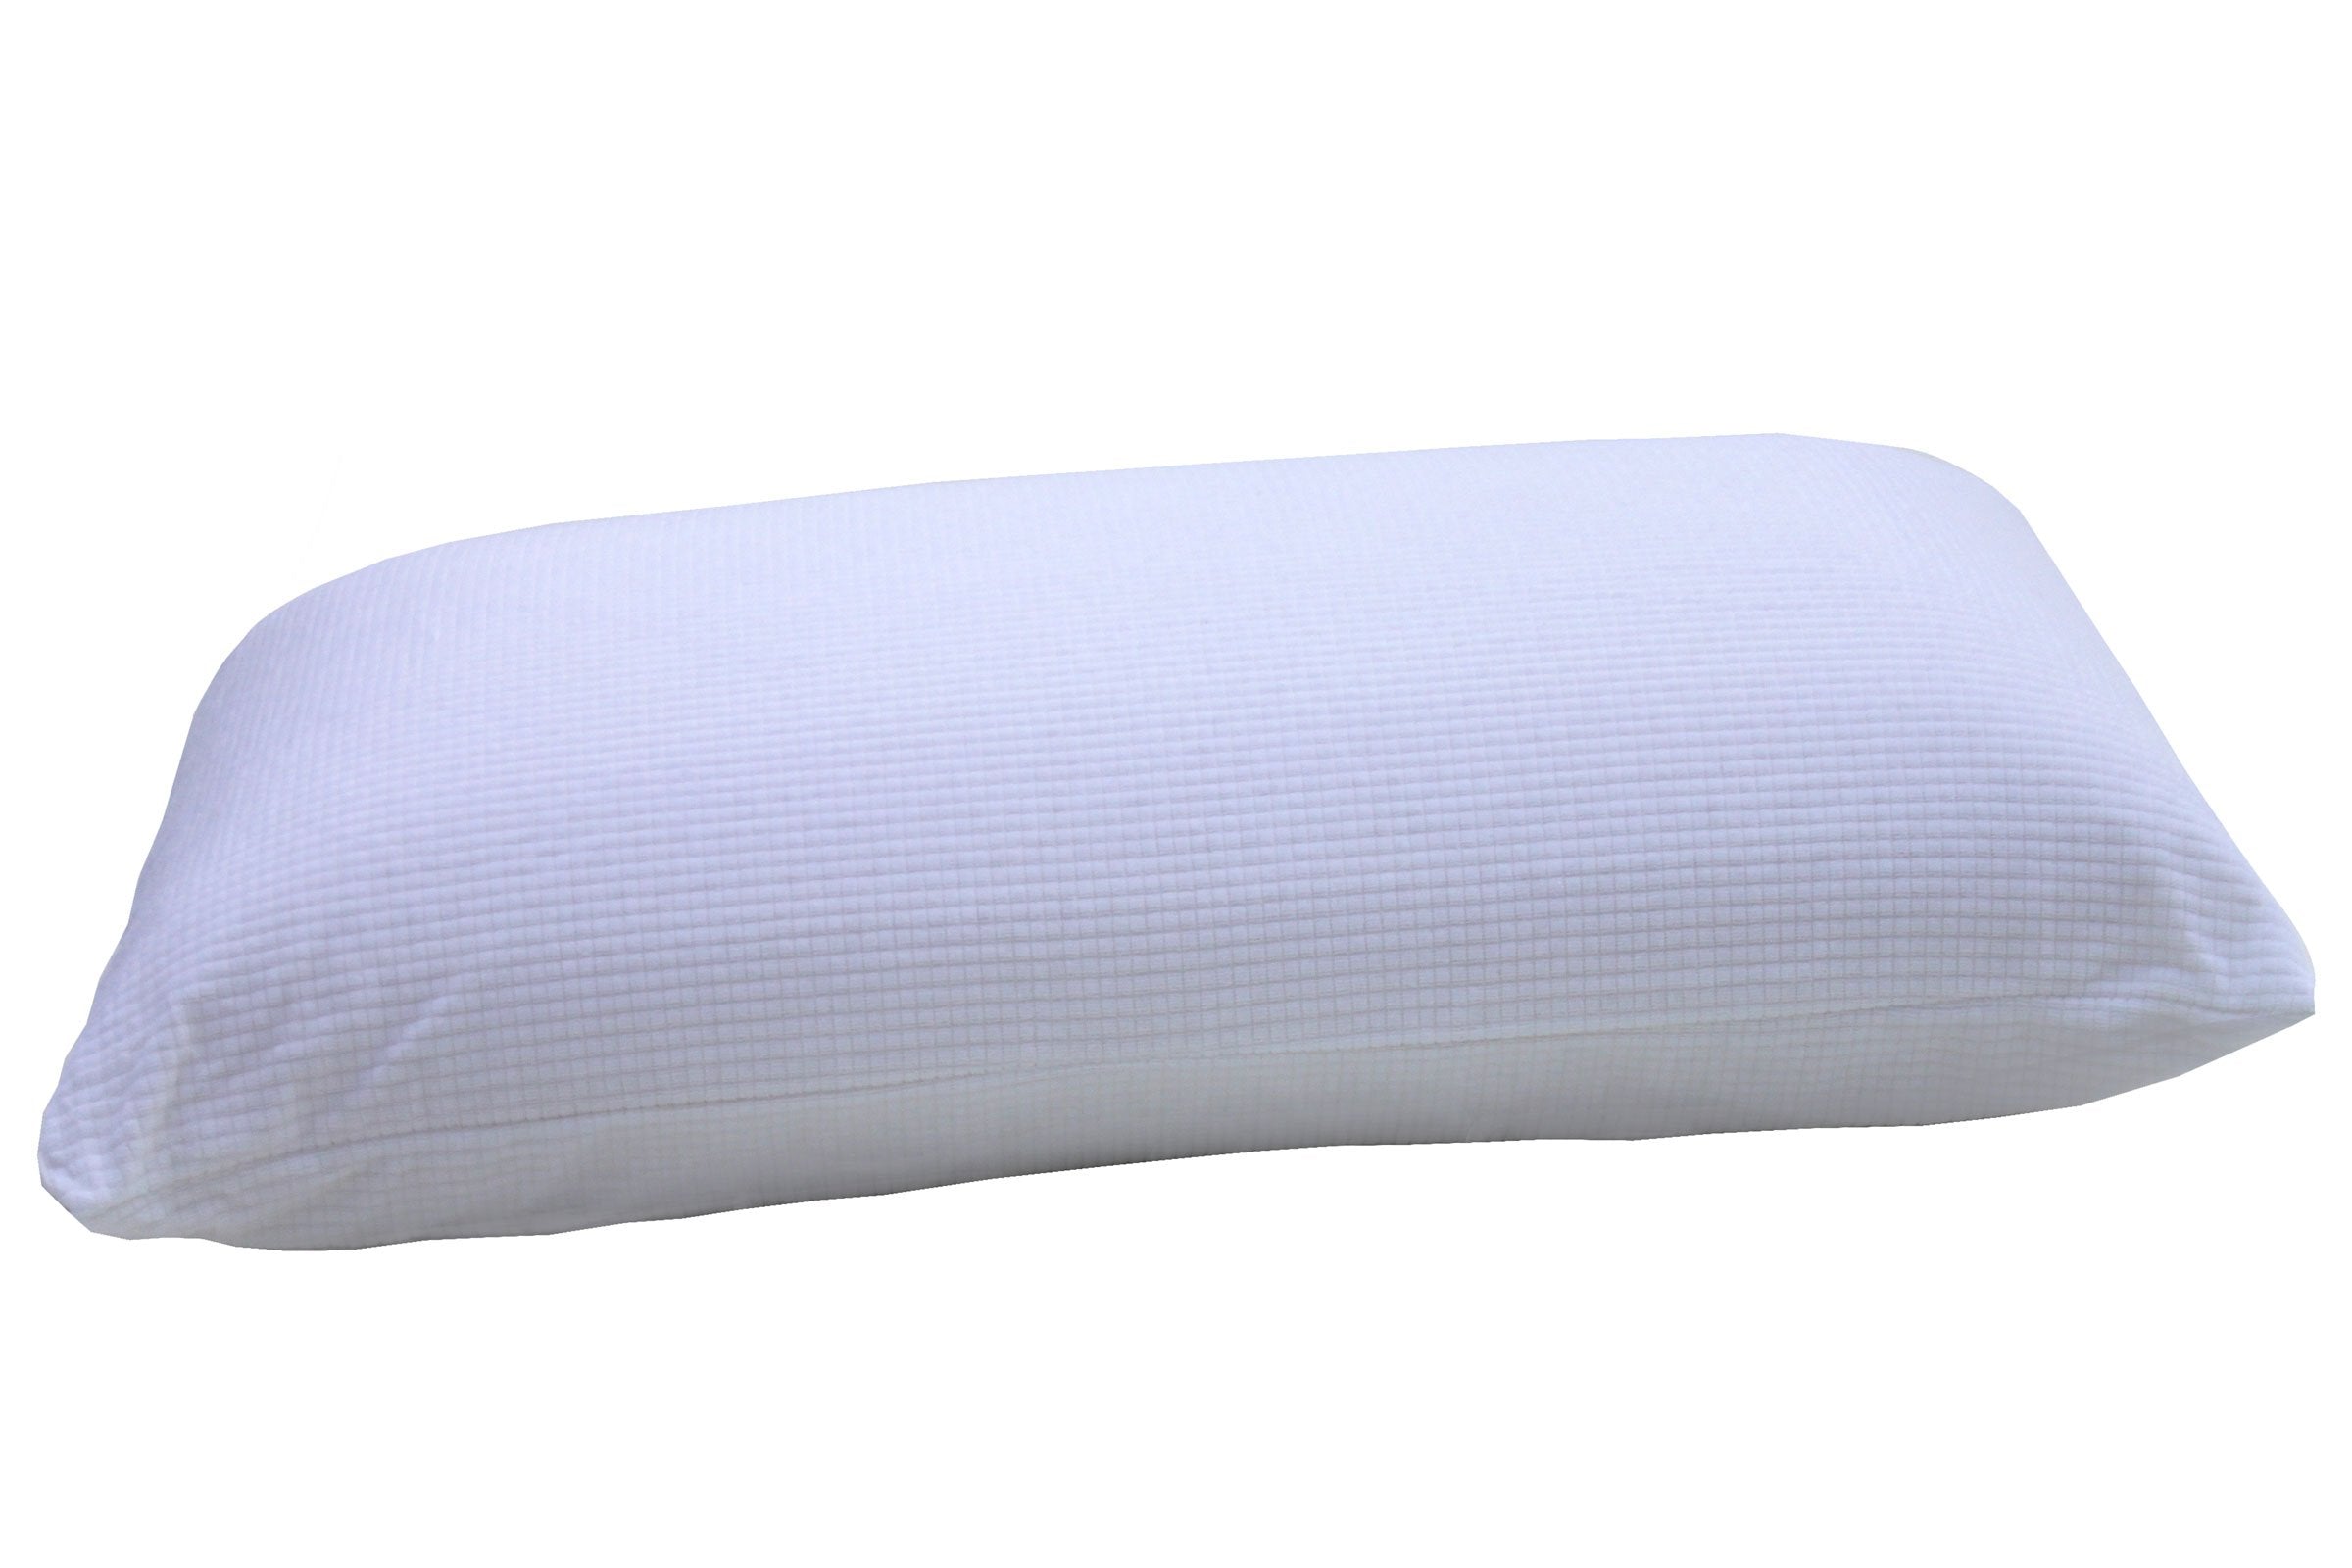 Low Profile Classic Talalay Latex Pillow (aka Classic TalaTech brand) – SleepLikeABear.com